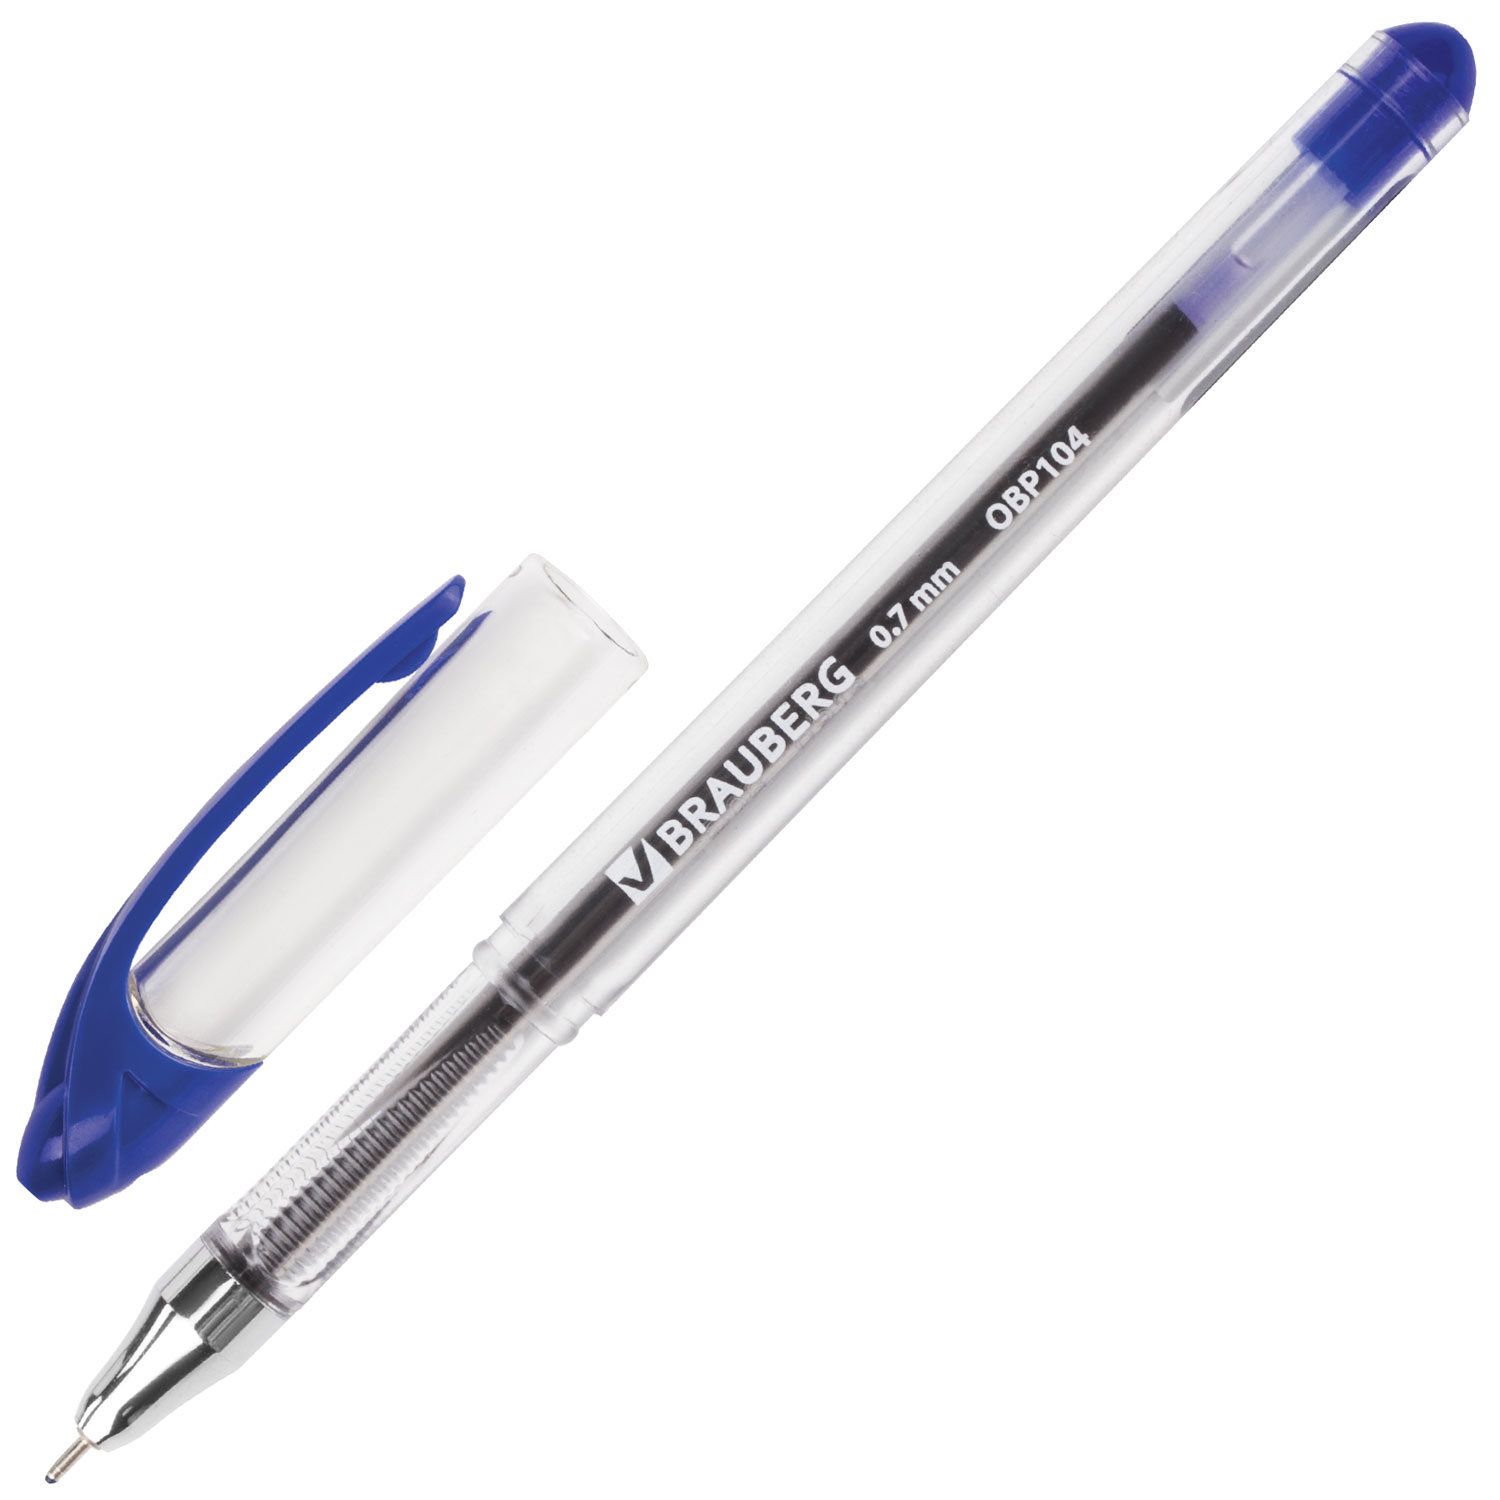 Brauberg 0.7. Ручка БРАУБЕРГ 0.7 масляная. Ручка БРАУБЕРГ масляная. Ручка шариковая 0,7 мм BRAUBERG. Ручка BRAUBERG 0.7 мм масляная.